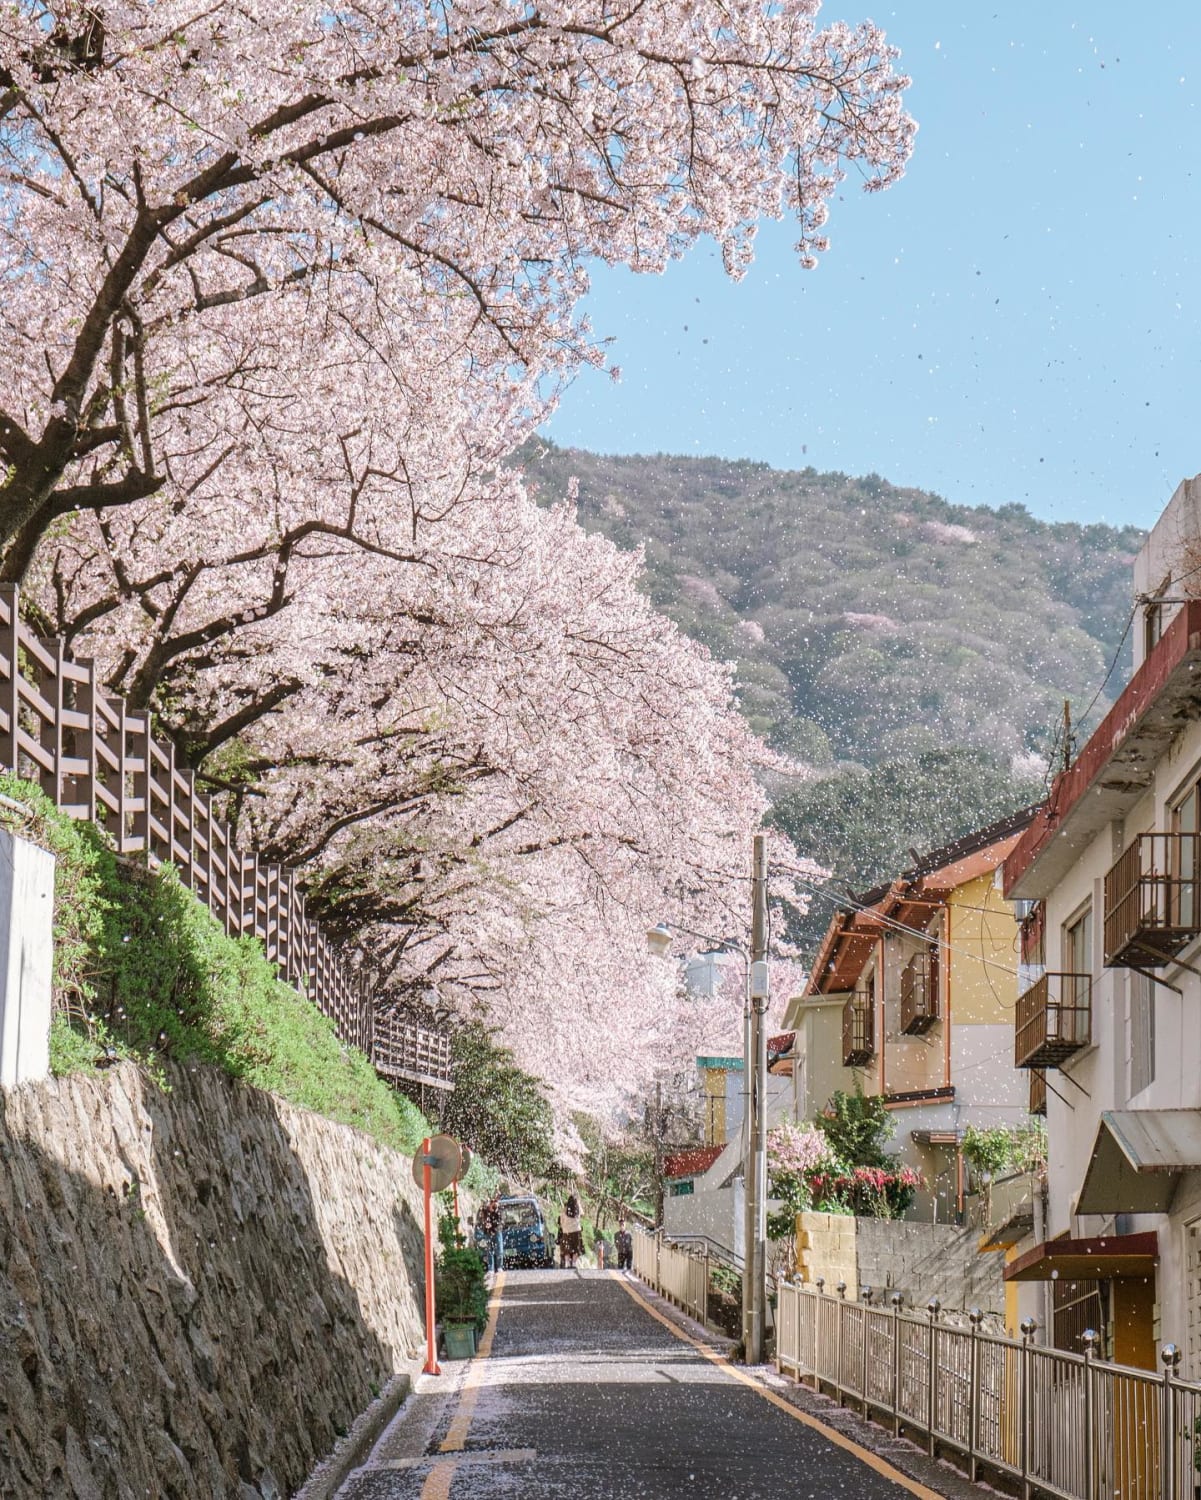 Cherry blossom petals raining over a hillside road in Busan, South Korea.